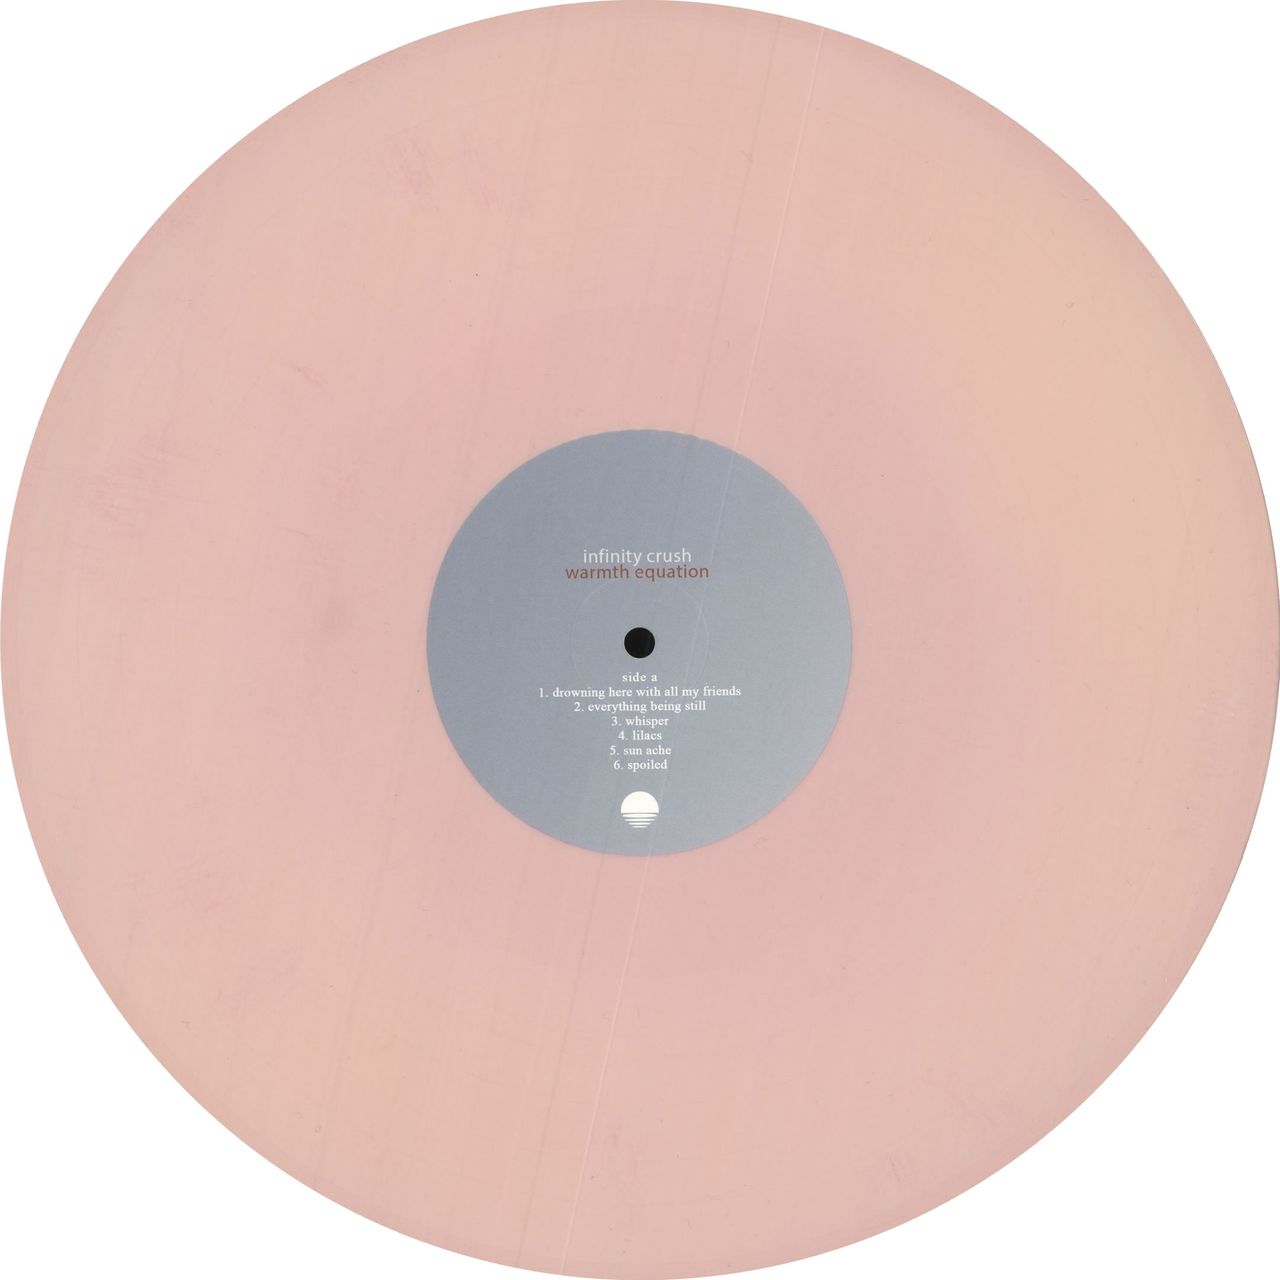 Infinity Crush Warmth Equation - Baby Pink Vinyl US Vinyl LP Album Record 009 Joy Void 2016